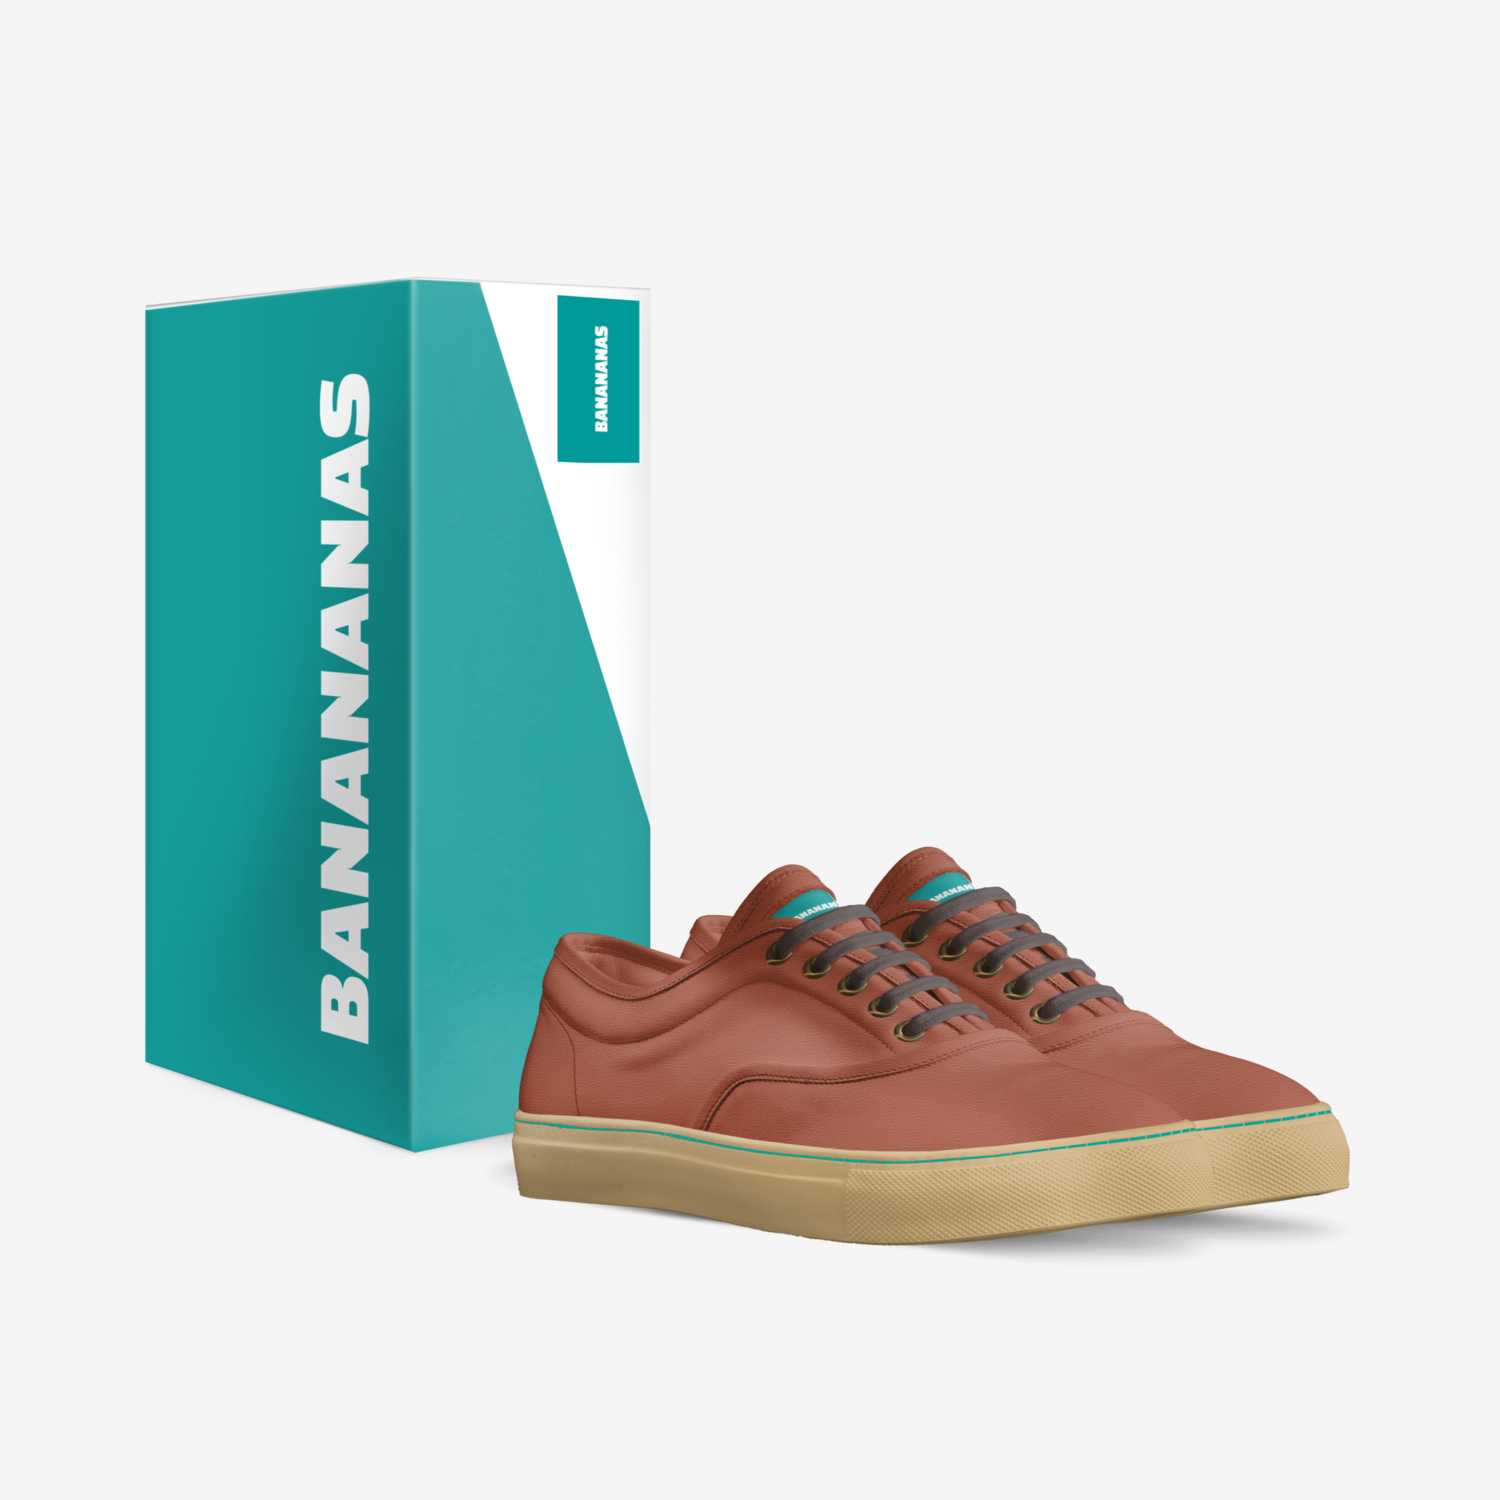 Banananas custom made in Italy shoes by Riccardo Randi | Box view